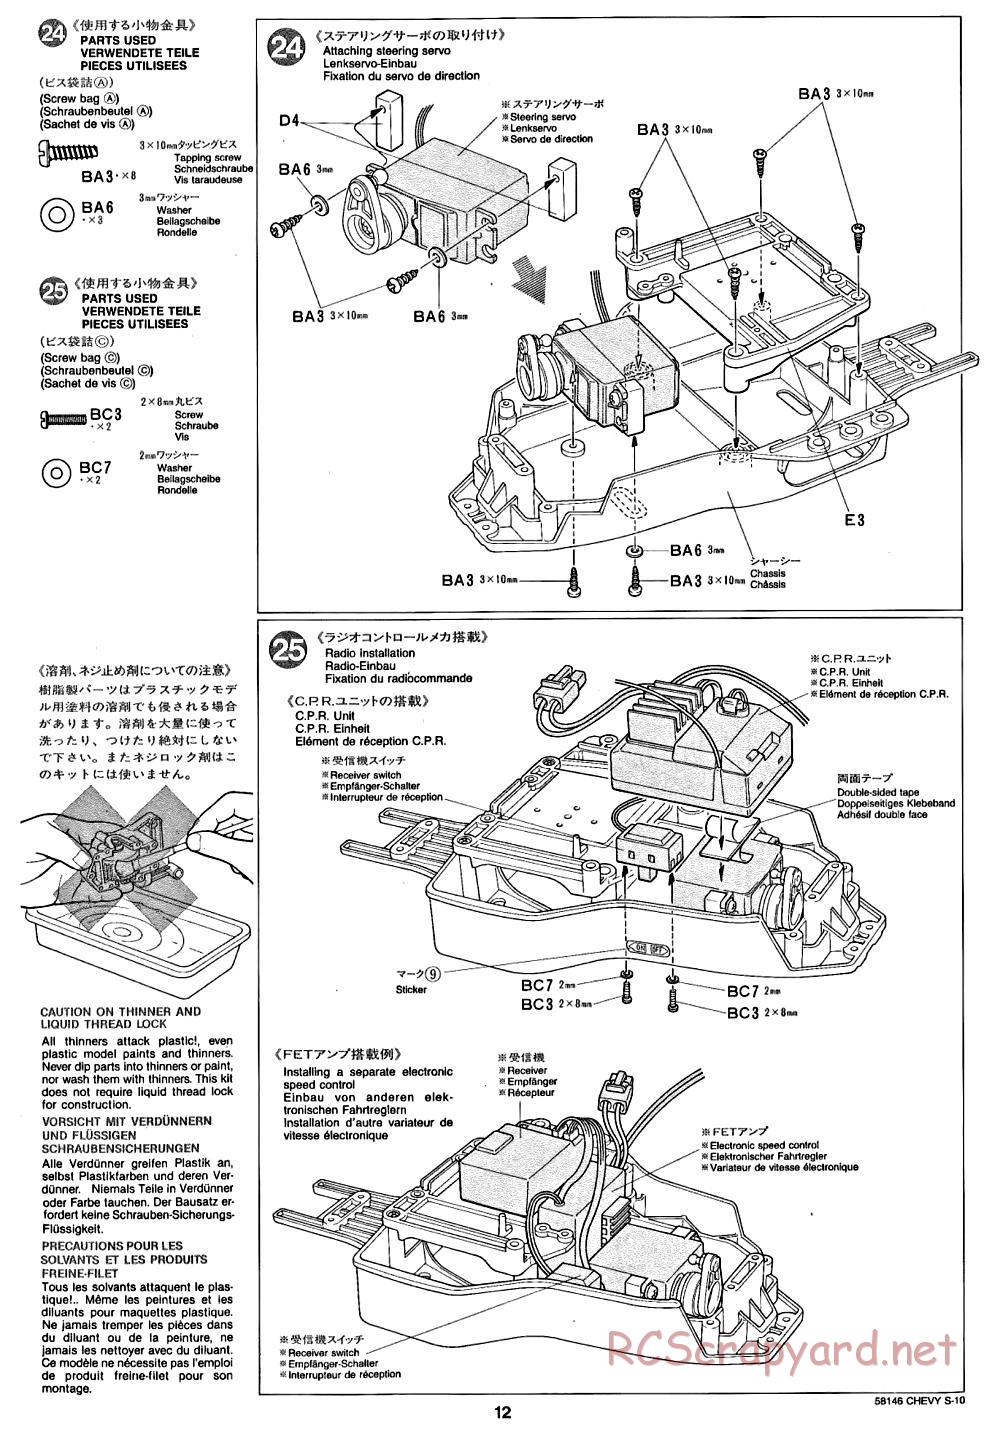 Tamiya - Chevy S-10 Chassis - Manual - Page 12